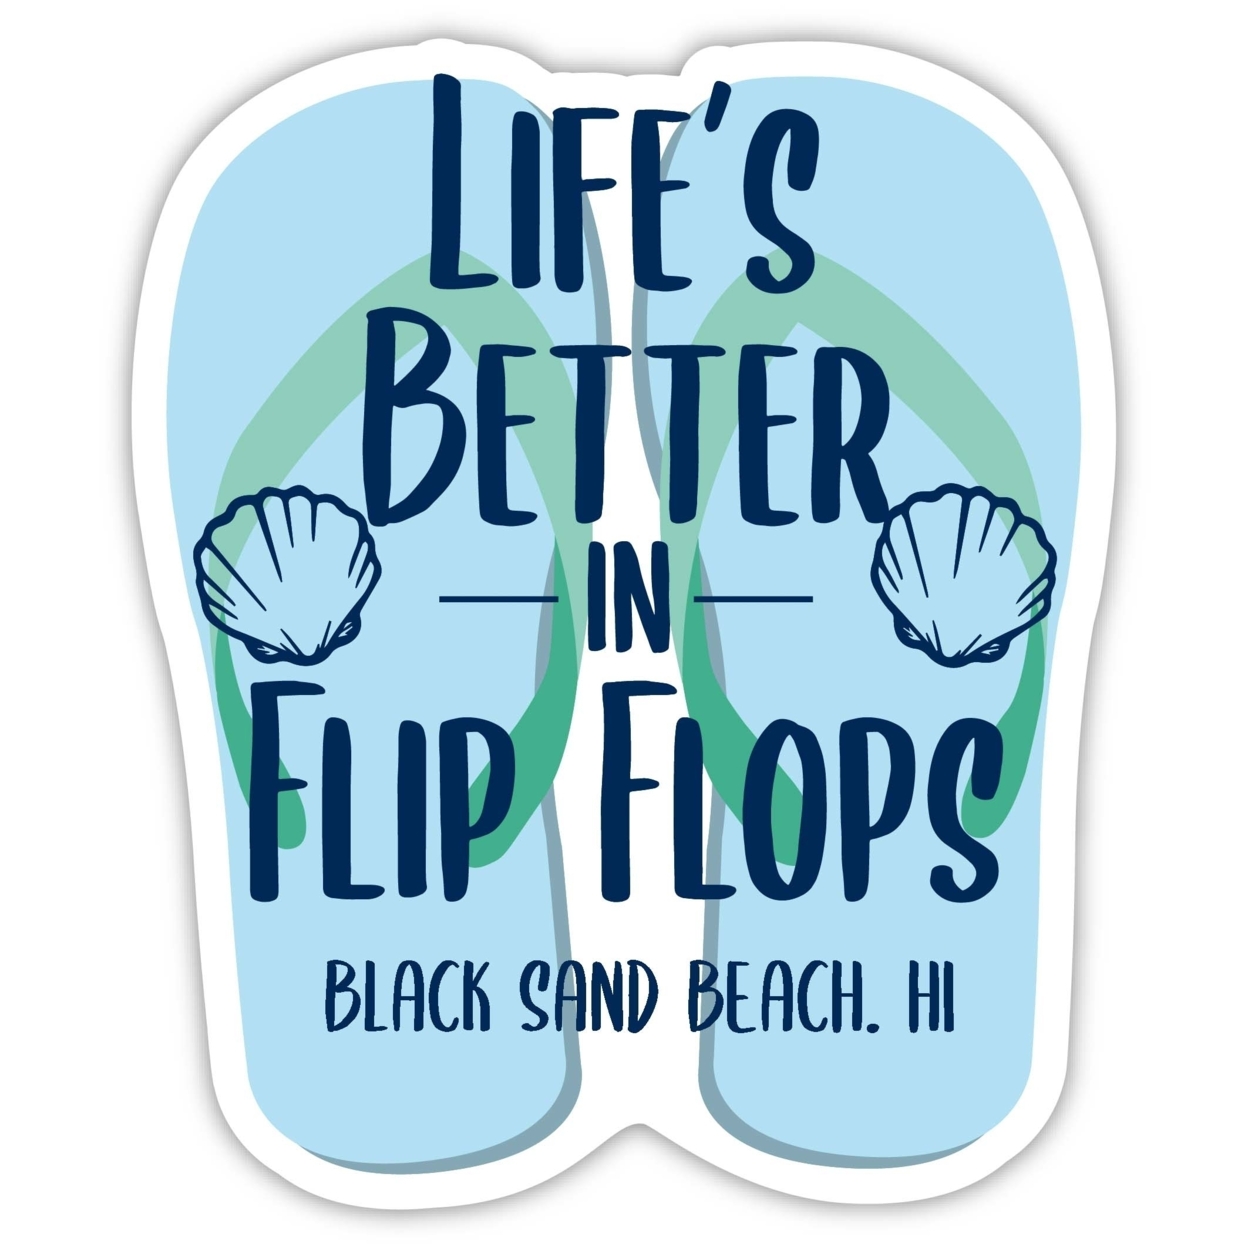 Black Sand Beach Hawaii Souvenir 4 Inch Vinyl Decal Sticker Flip Flop Design